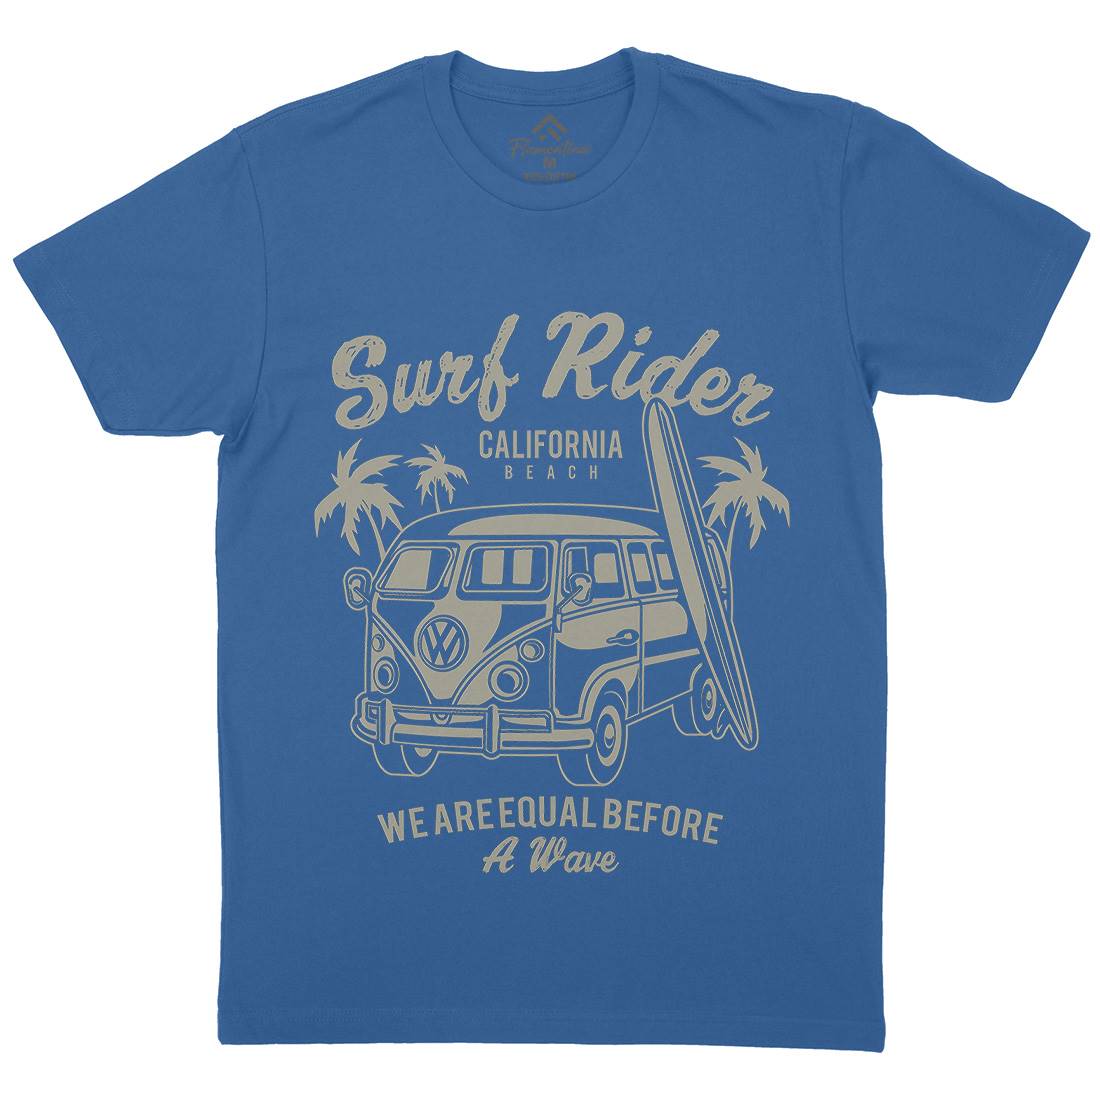 Rider Mens Crew Neck T-Shirt Surf A169